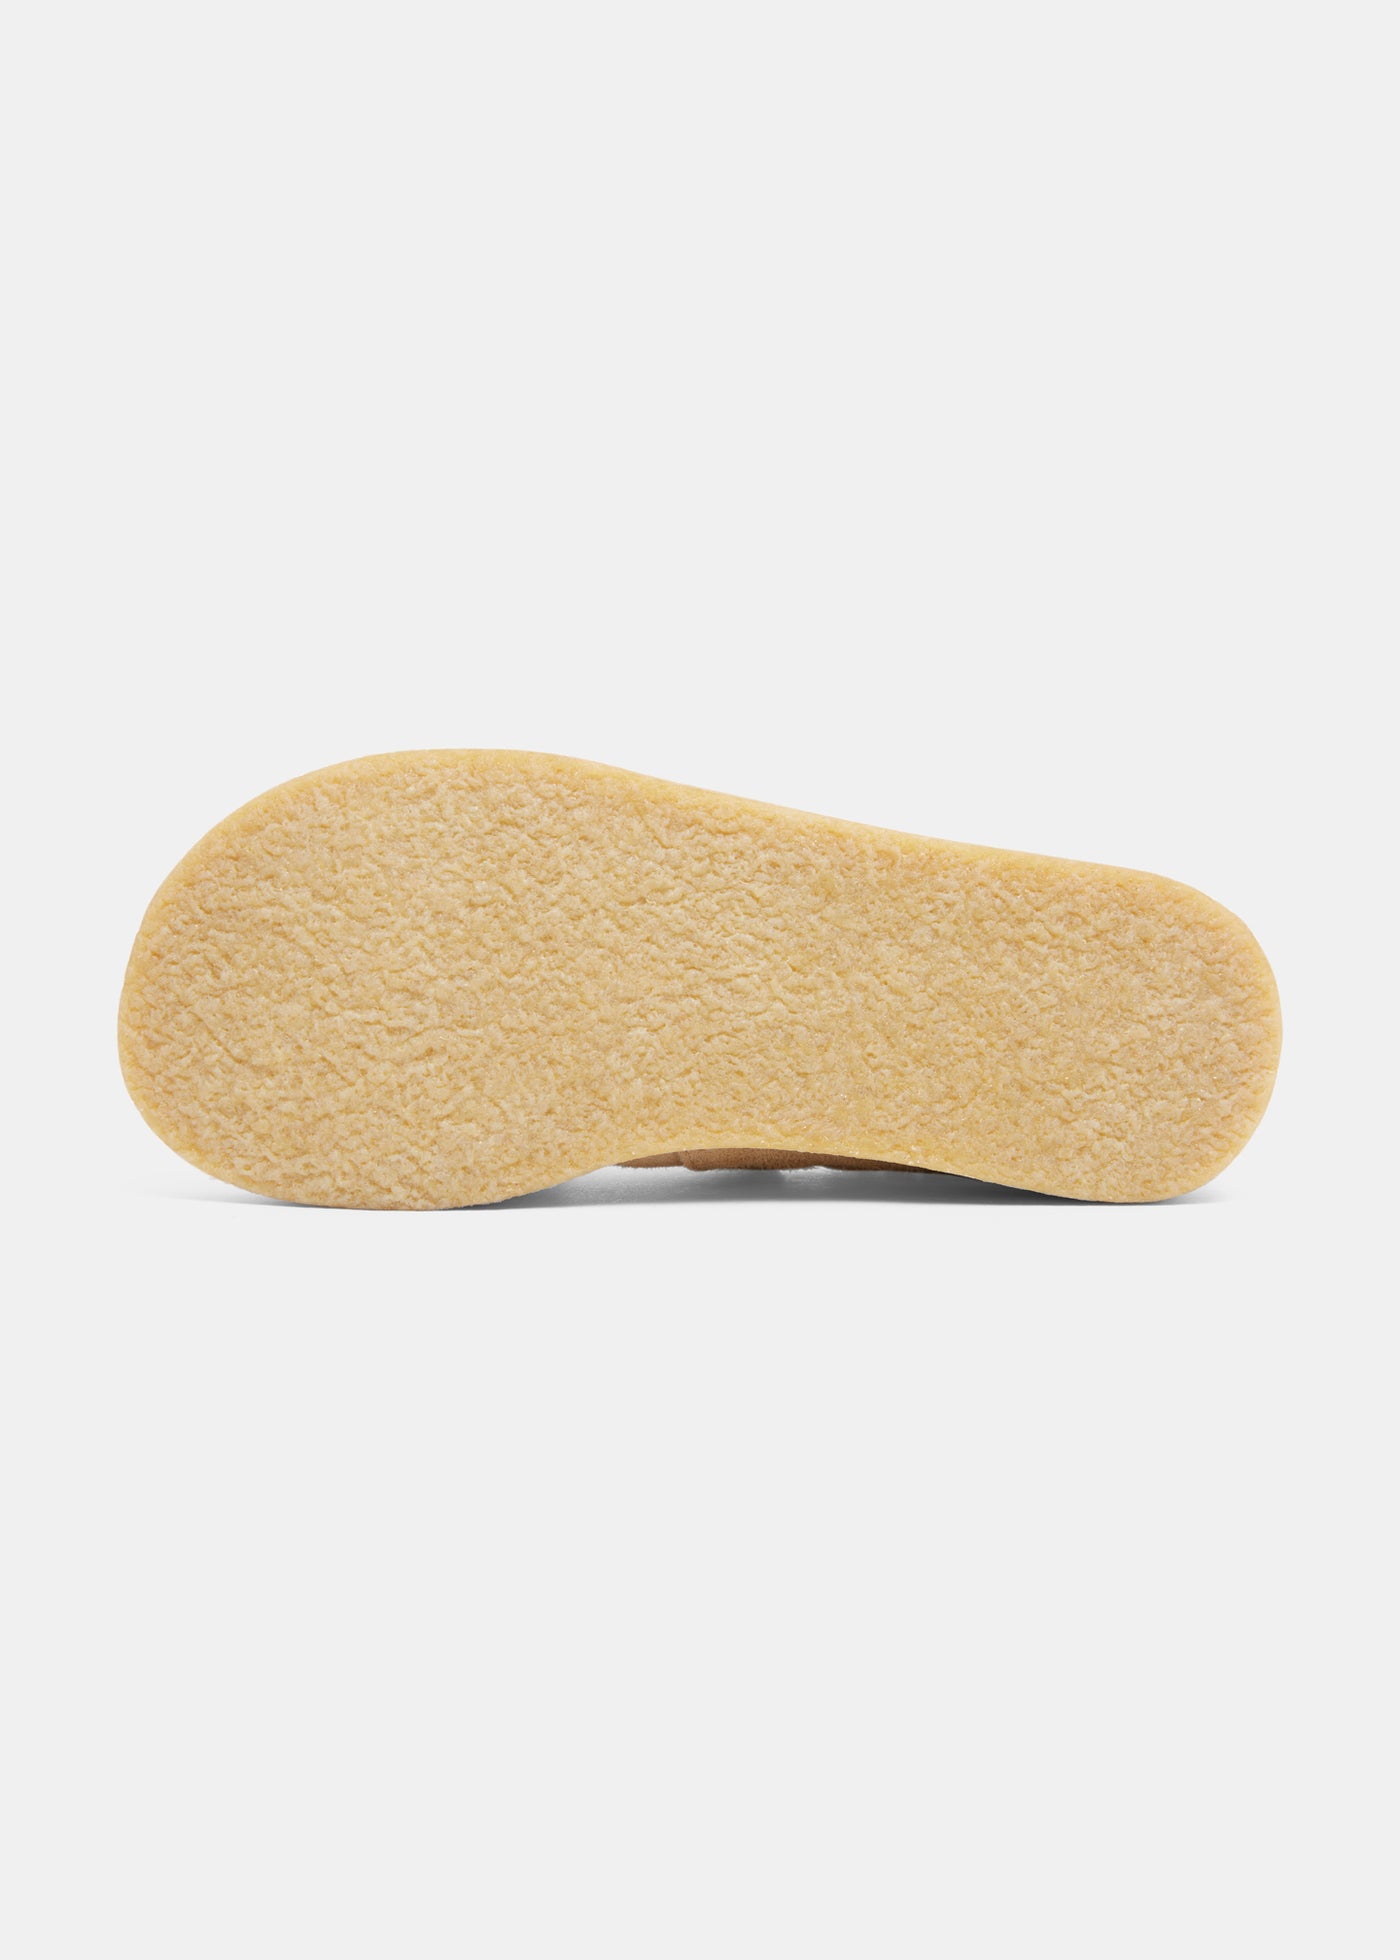 Yogi  Corso Suede Buckle Monk Shoe on Crepe Outsole /Hairy Sand